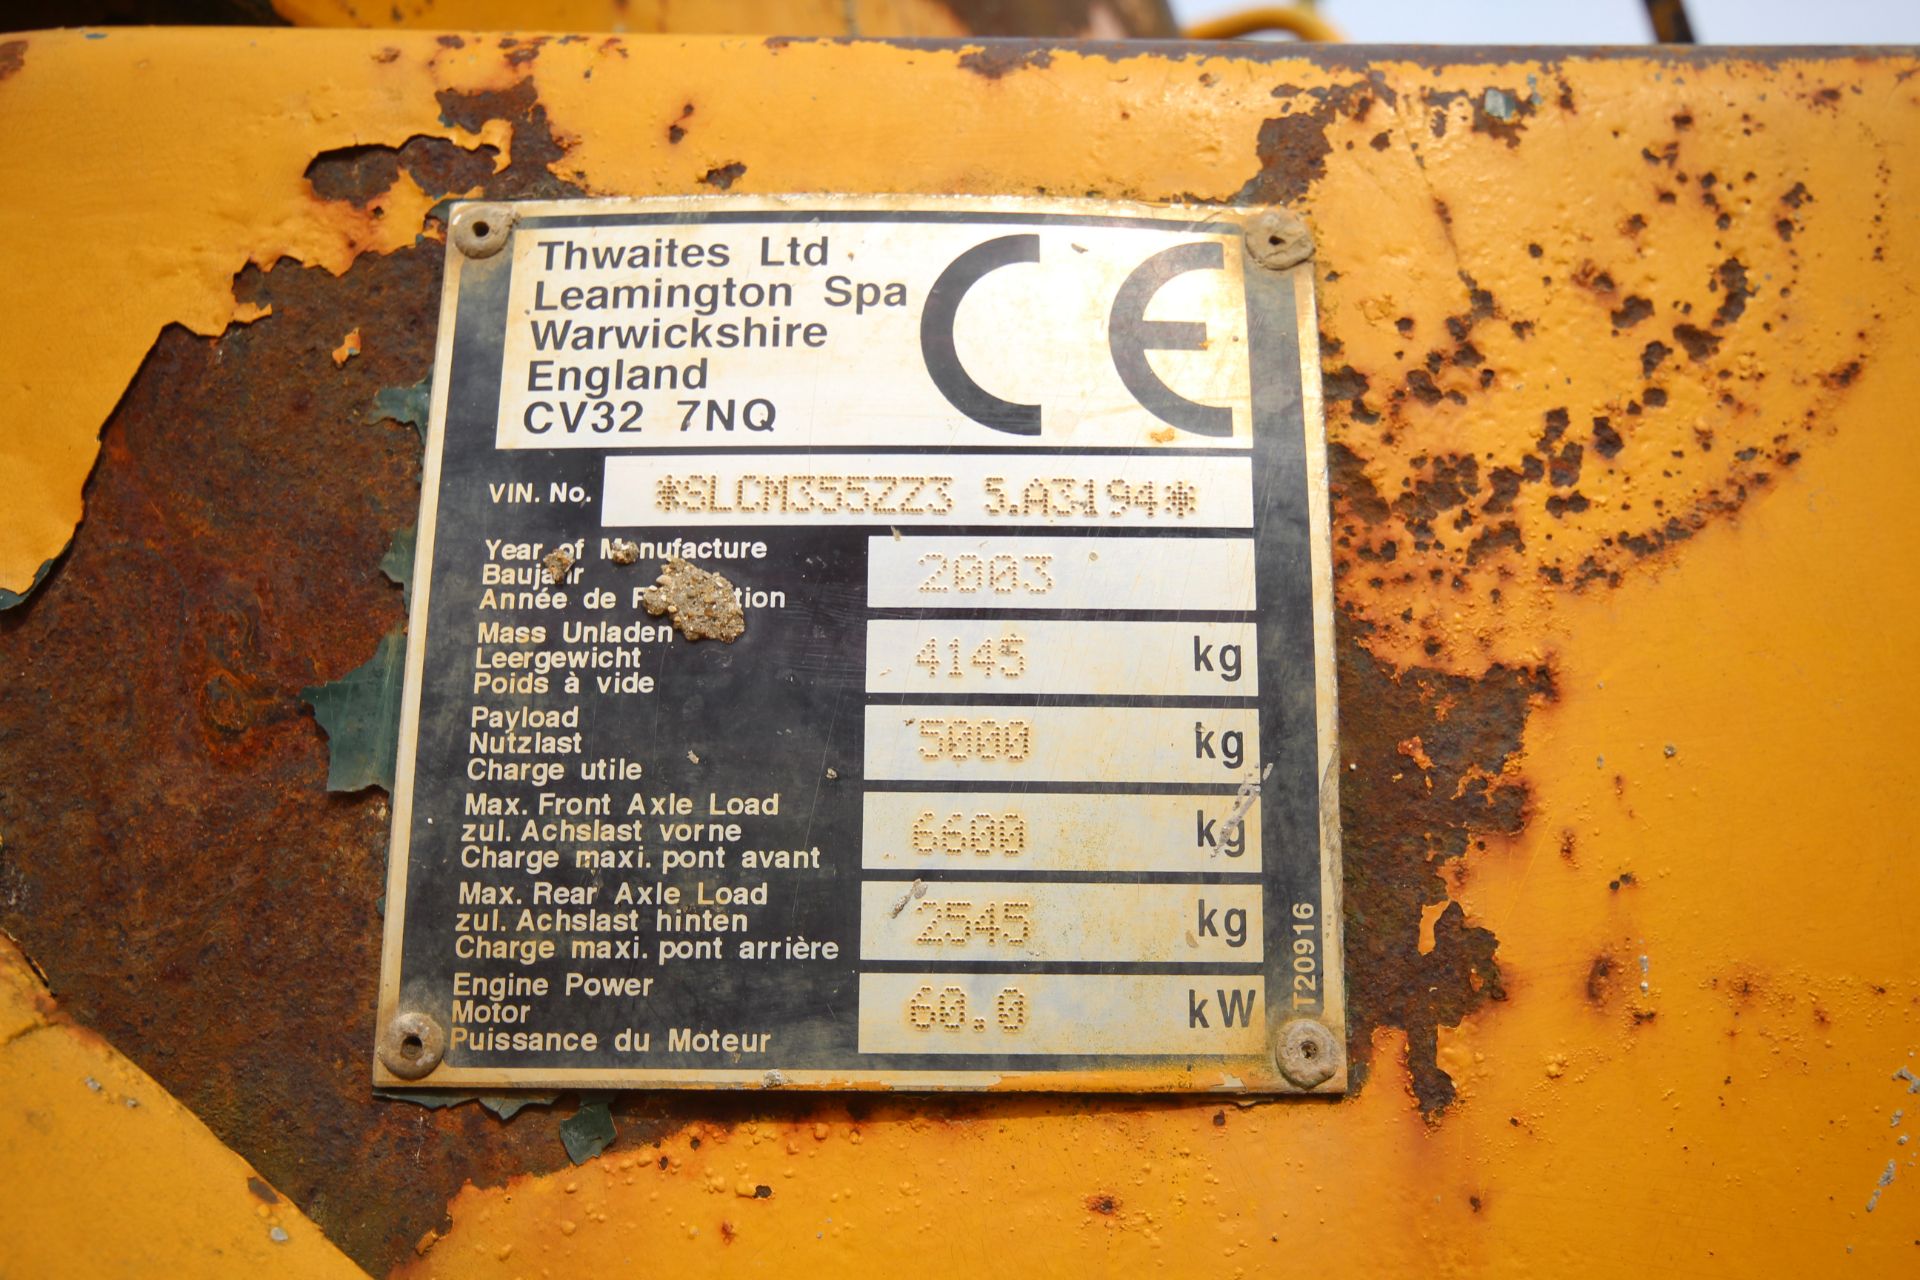 Thwaites 5T 4WD swivel tip dumper. 2003. 3,330 hours. Serial number SLCM355ZZ35.A3194. 12.5/80-18 - Image 37 of 37